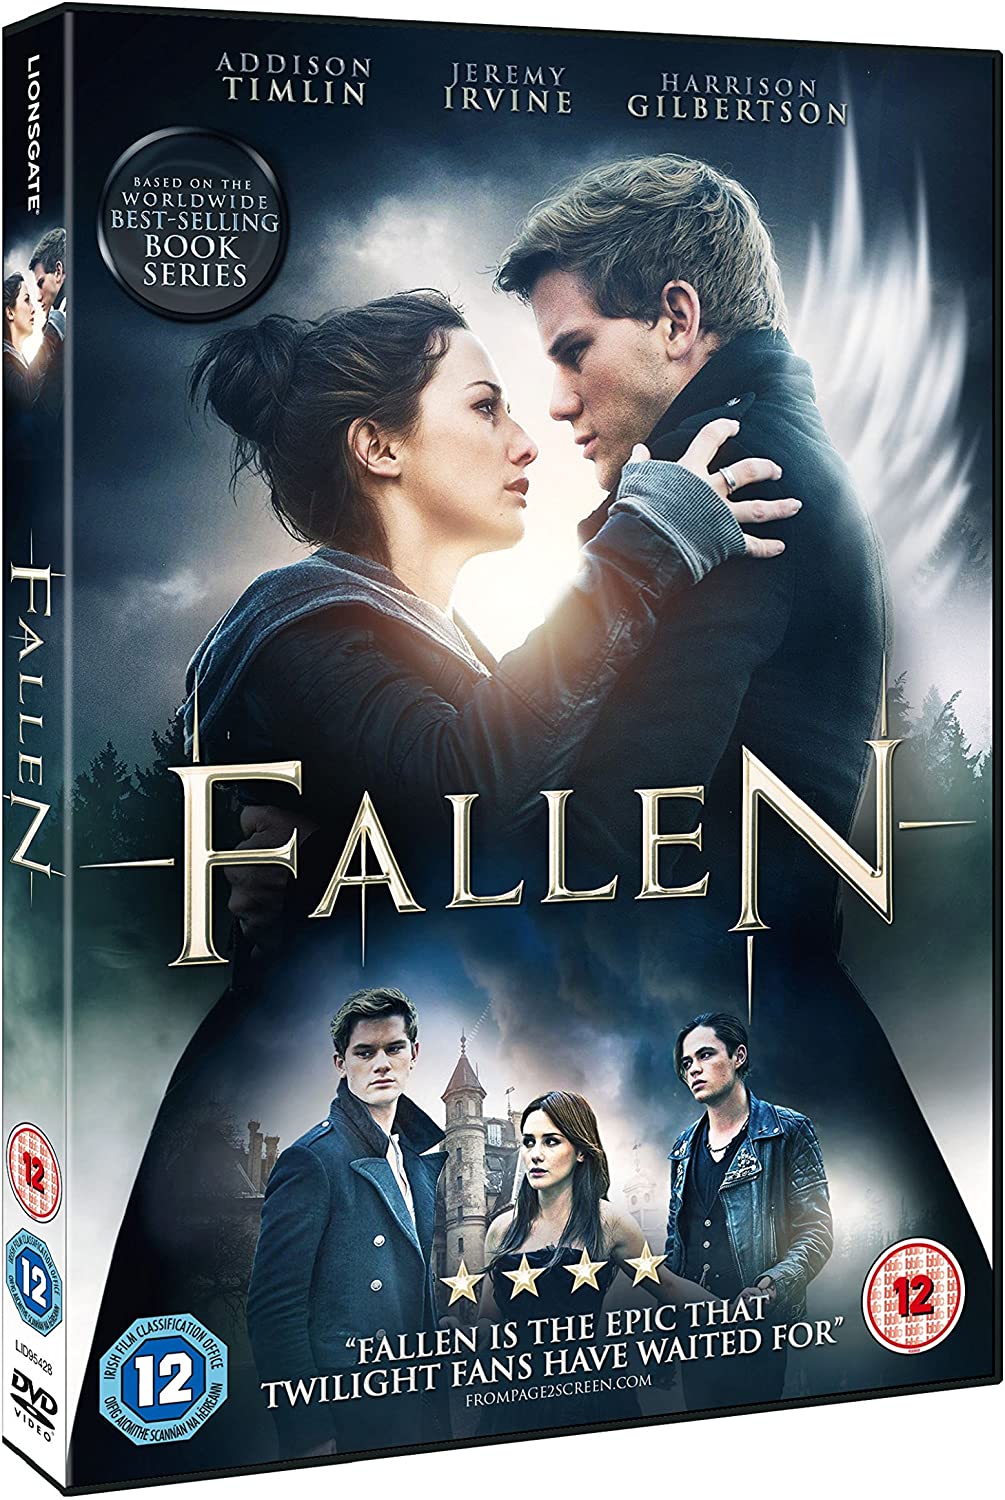 Fallen - Romance/Fantasy [DVD]